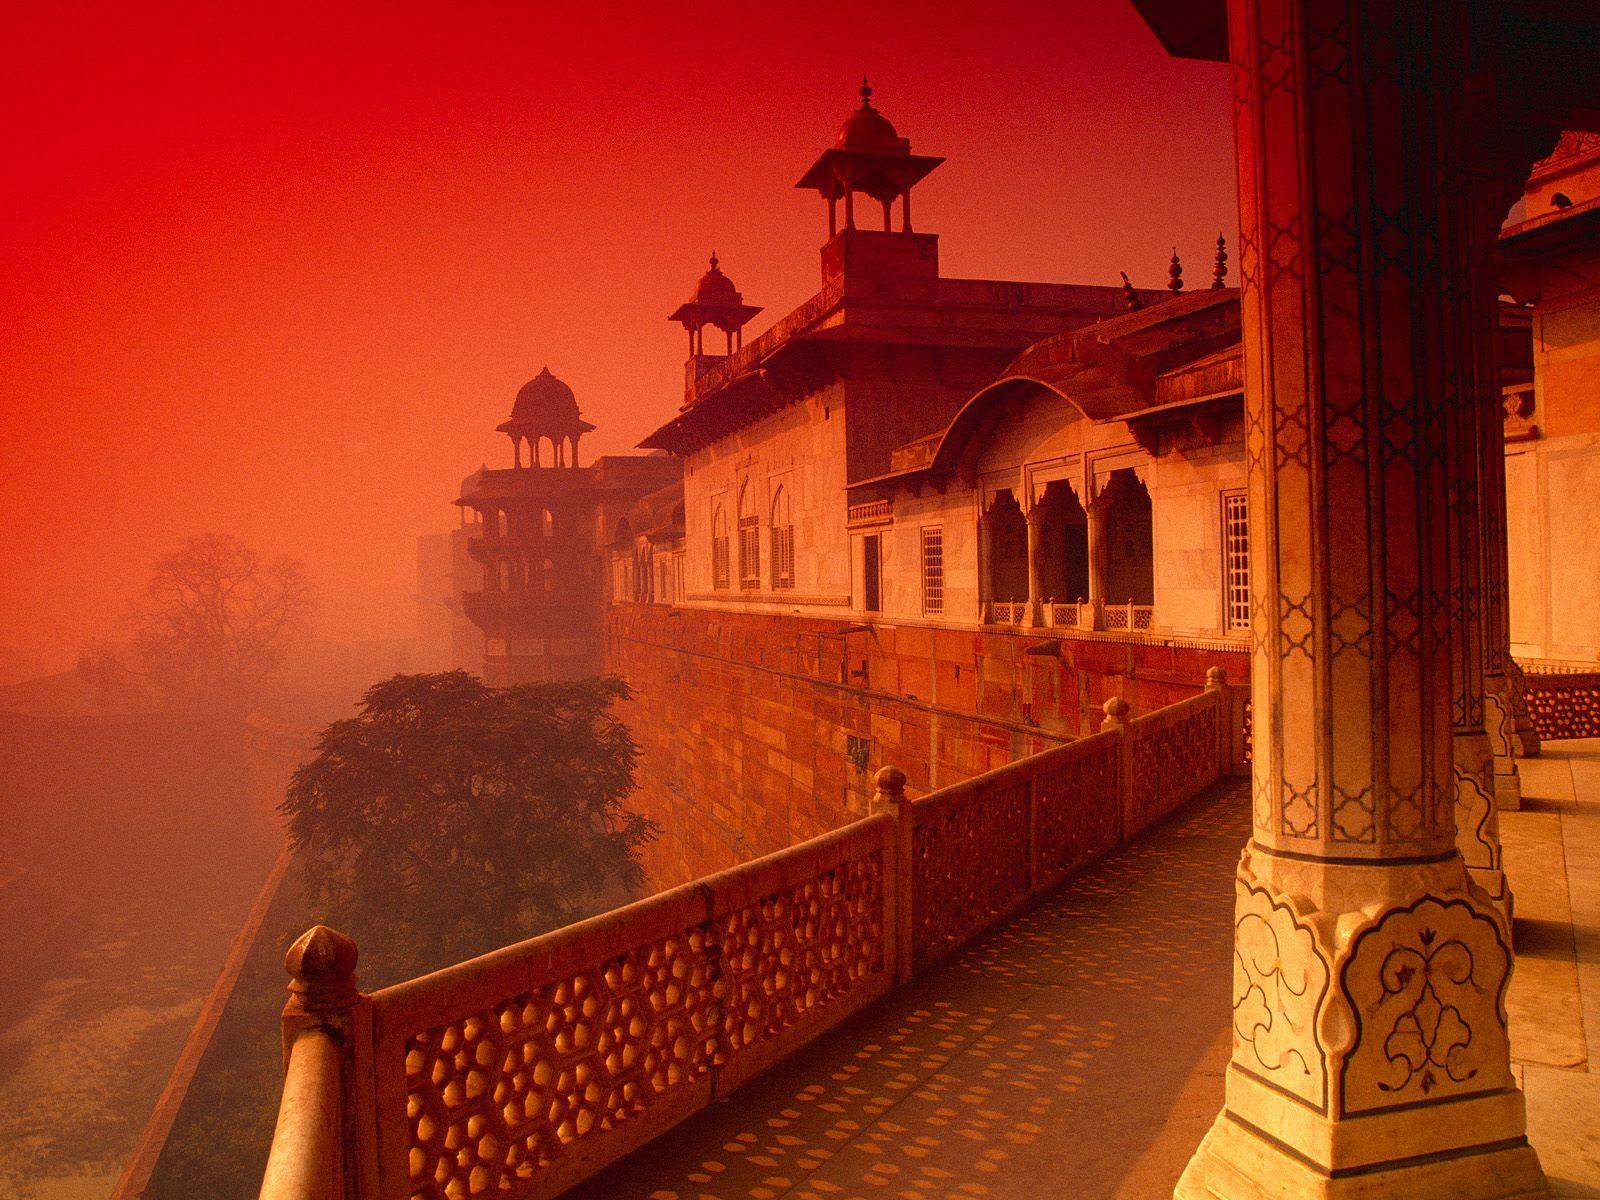 2500 Red Fort Delhi Stock Photos Pictures  RoyaltyFree Images  iStock   Red fort delhi british barracks